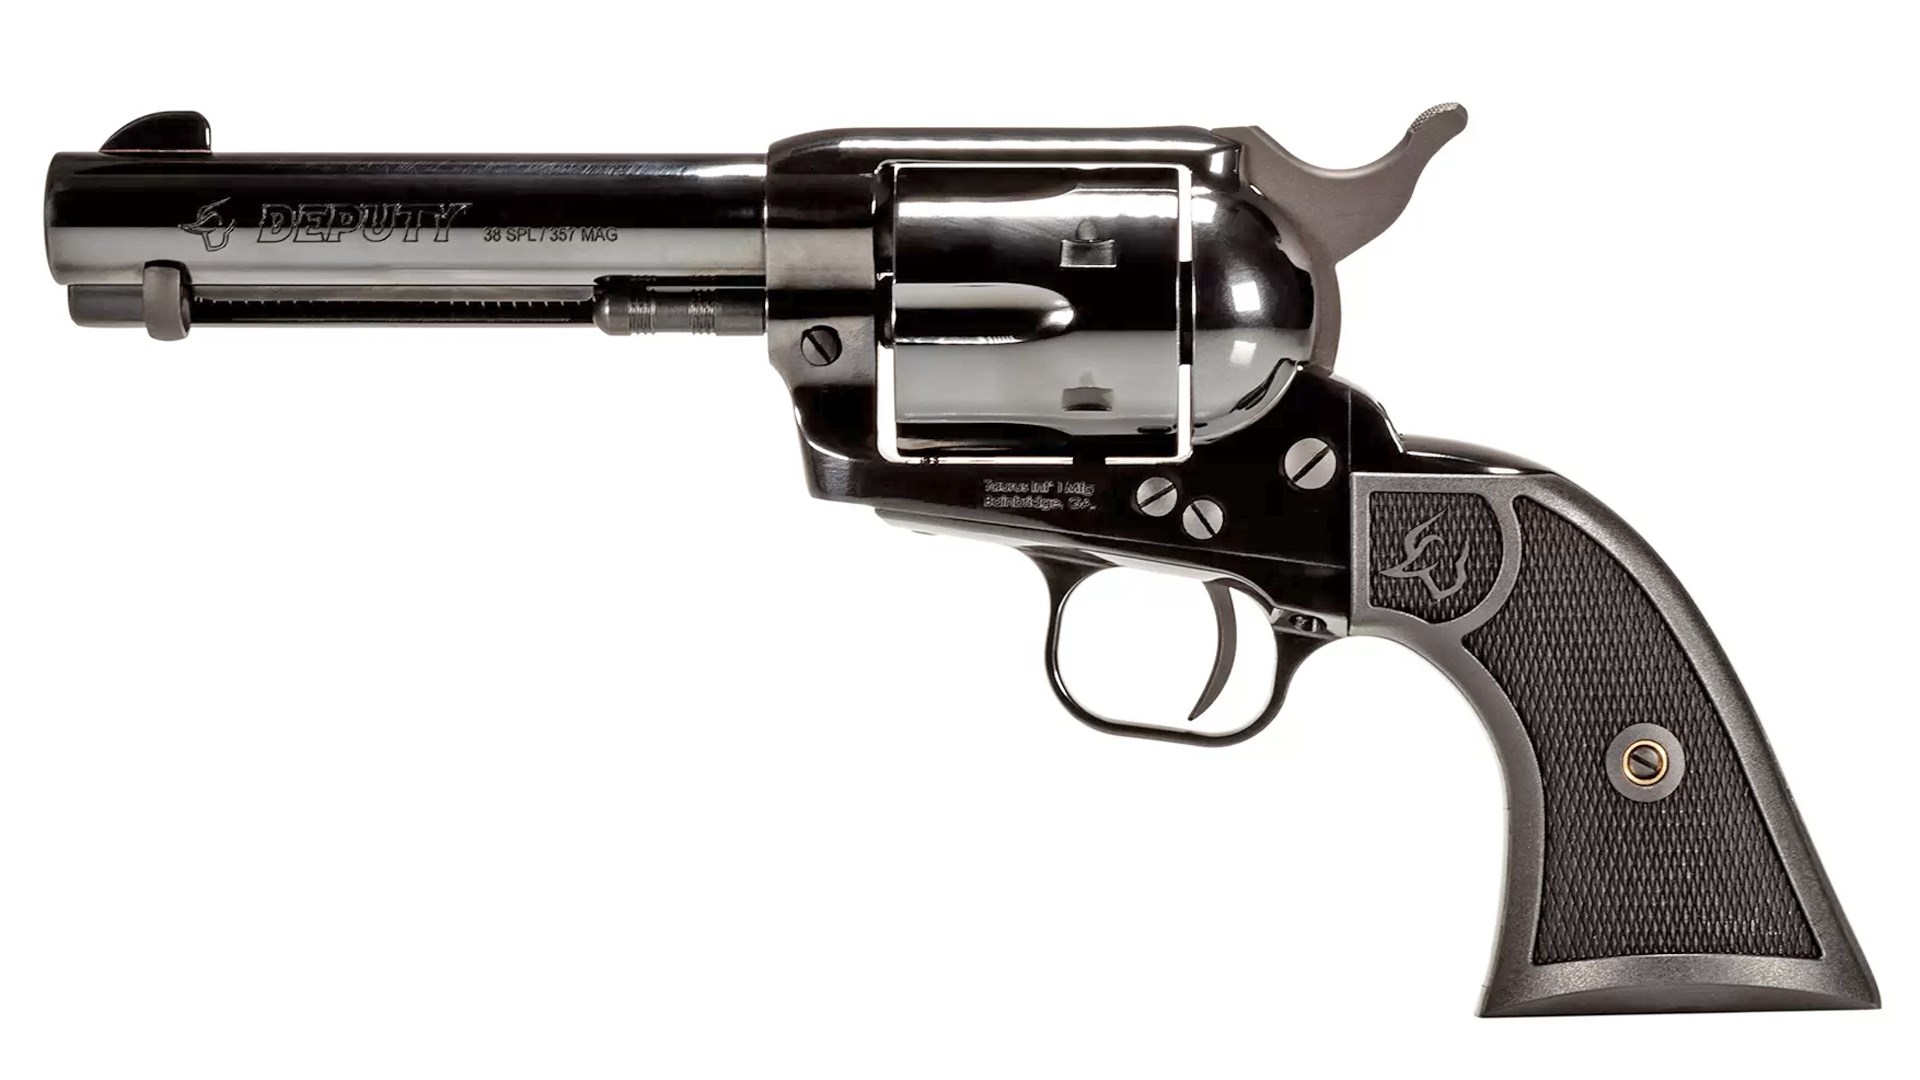 Left side of the black Taurus Deputy single-action revolver.